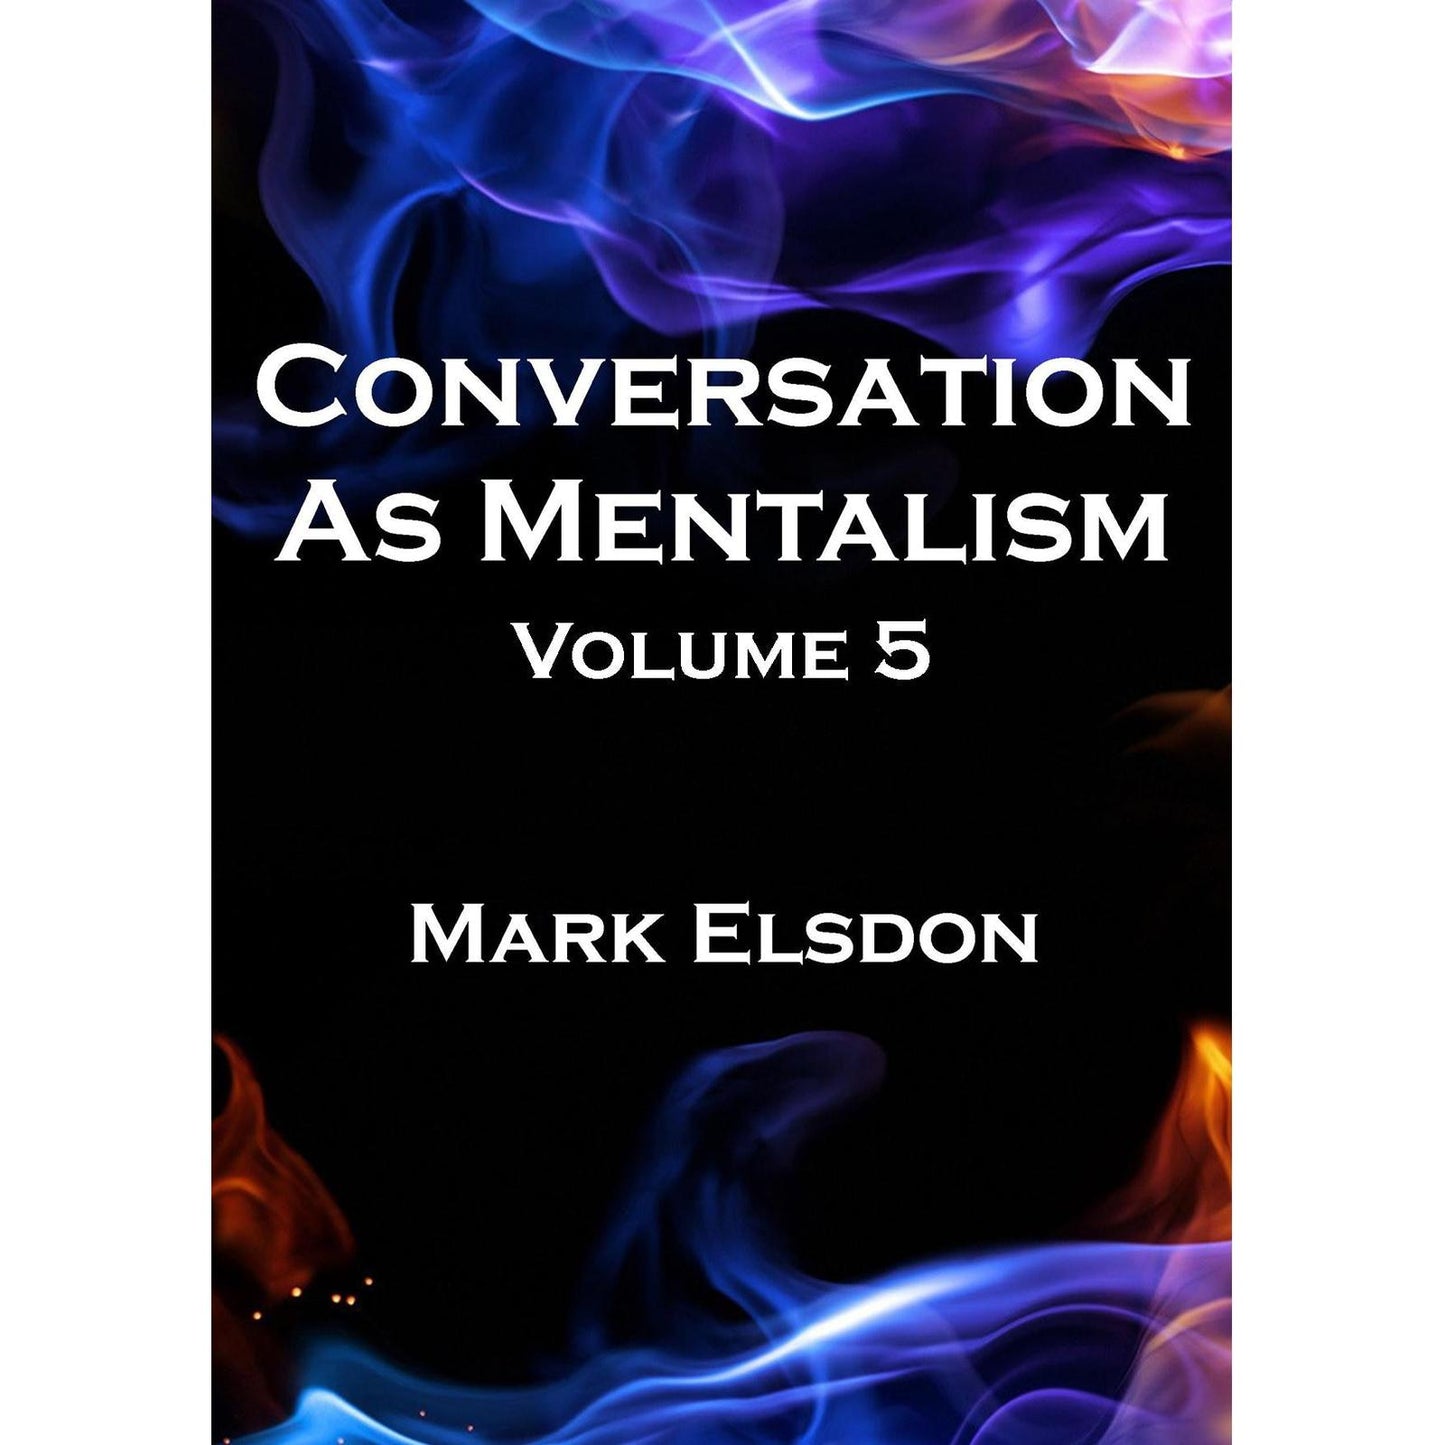 Conversation as Mentalism 5 by Mark Elsdon